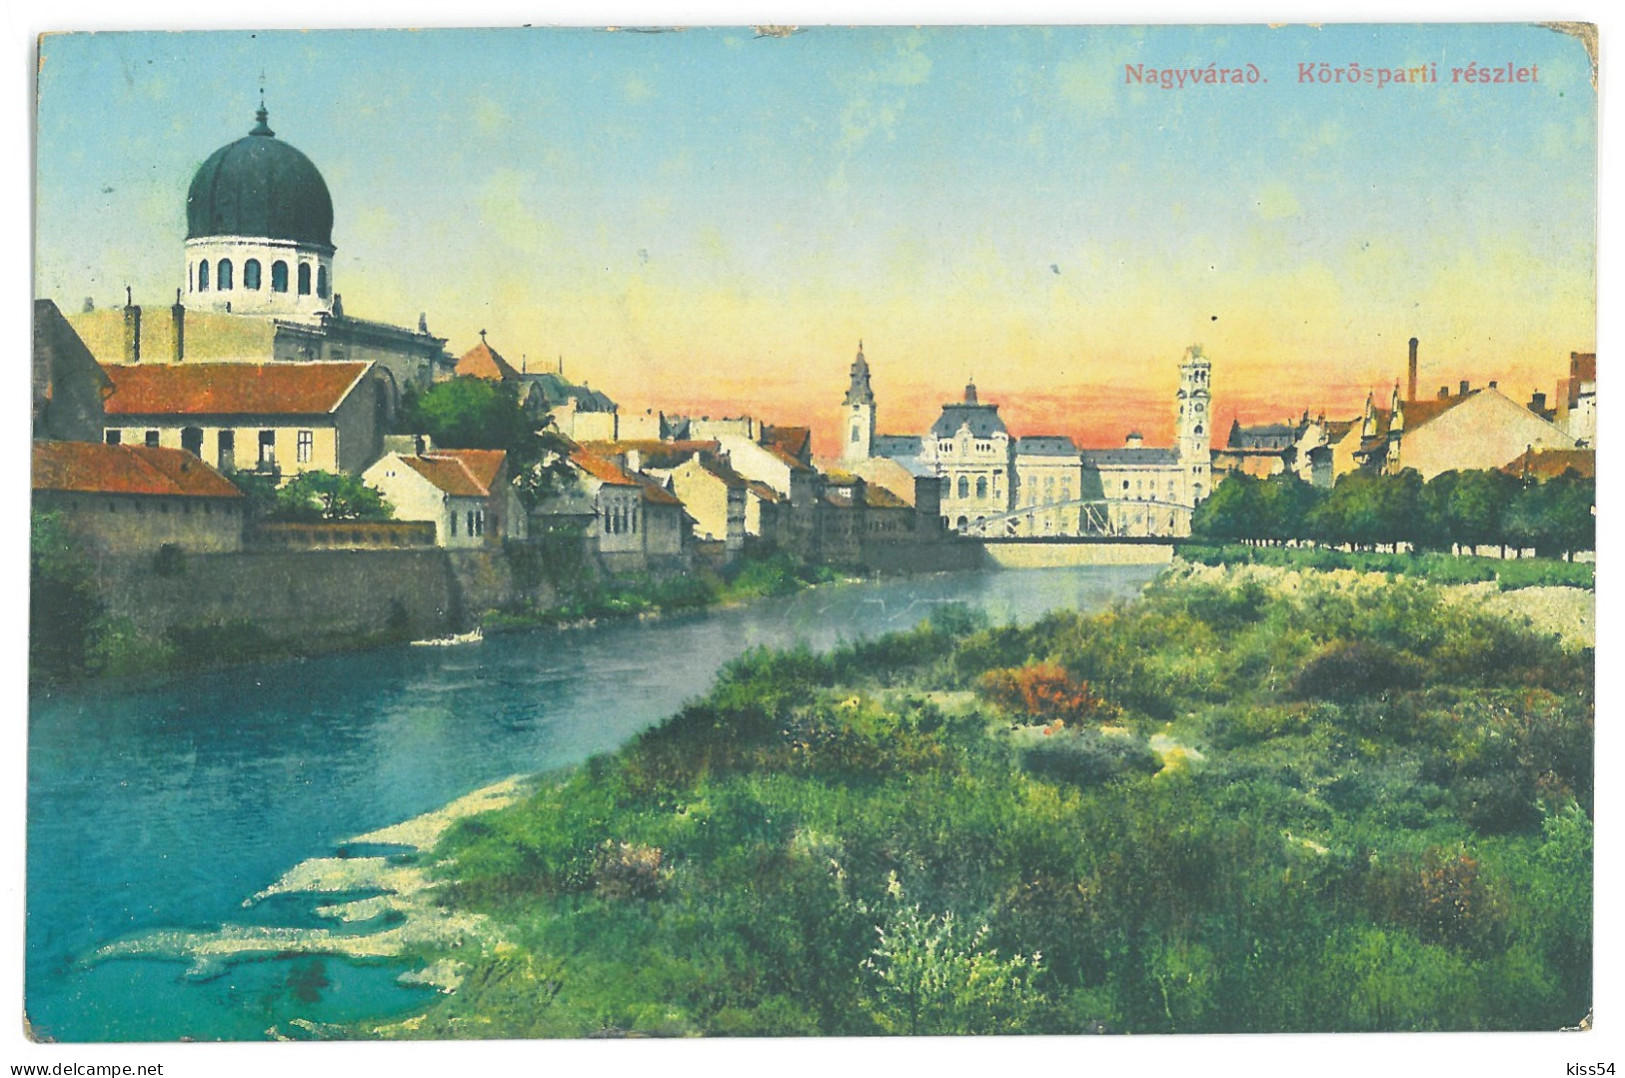 RO 77 - 16567 ORADEA, SYNAGOGUE, Romania - Old Postcard - Unused - Romania